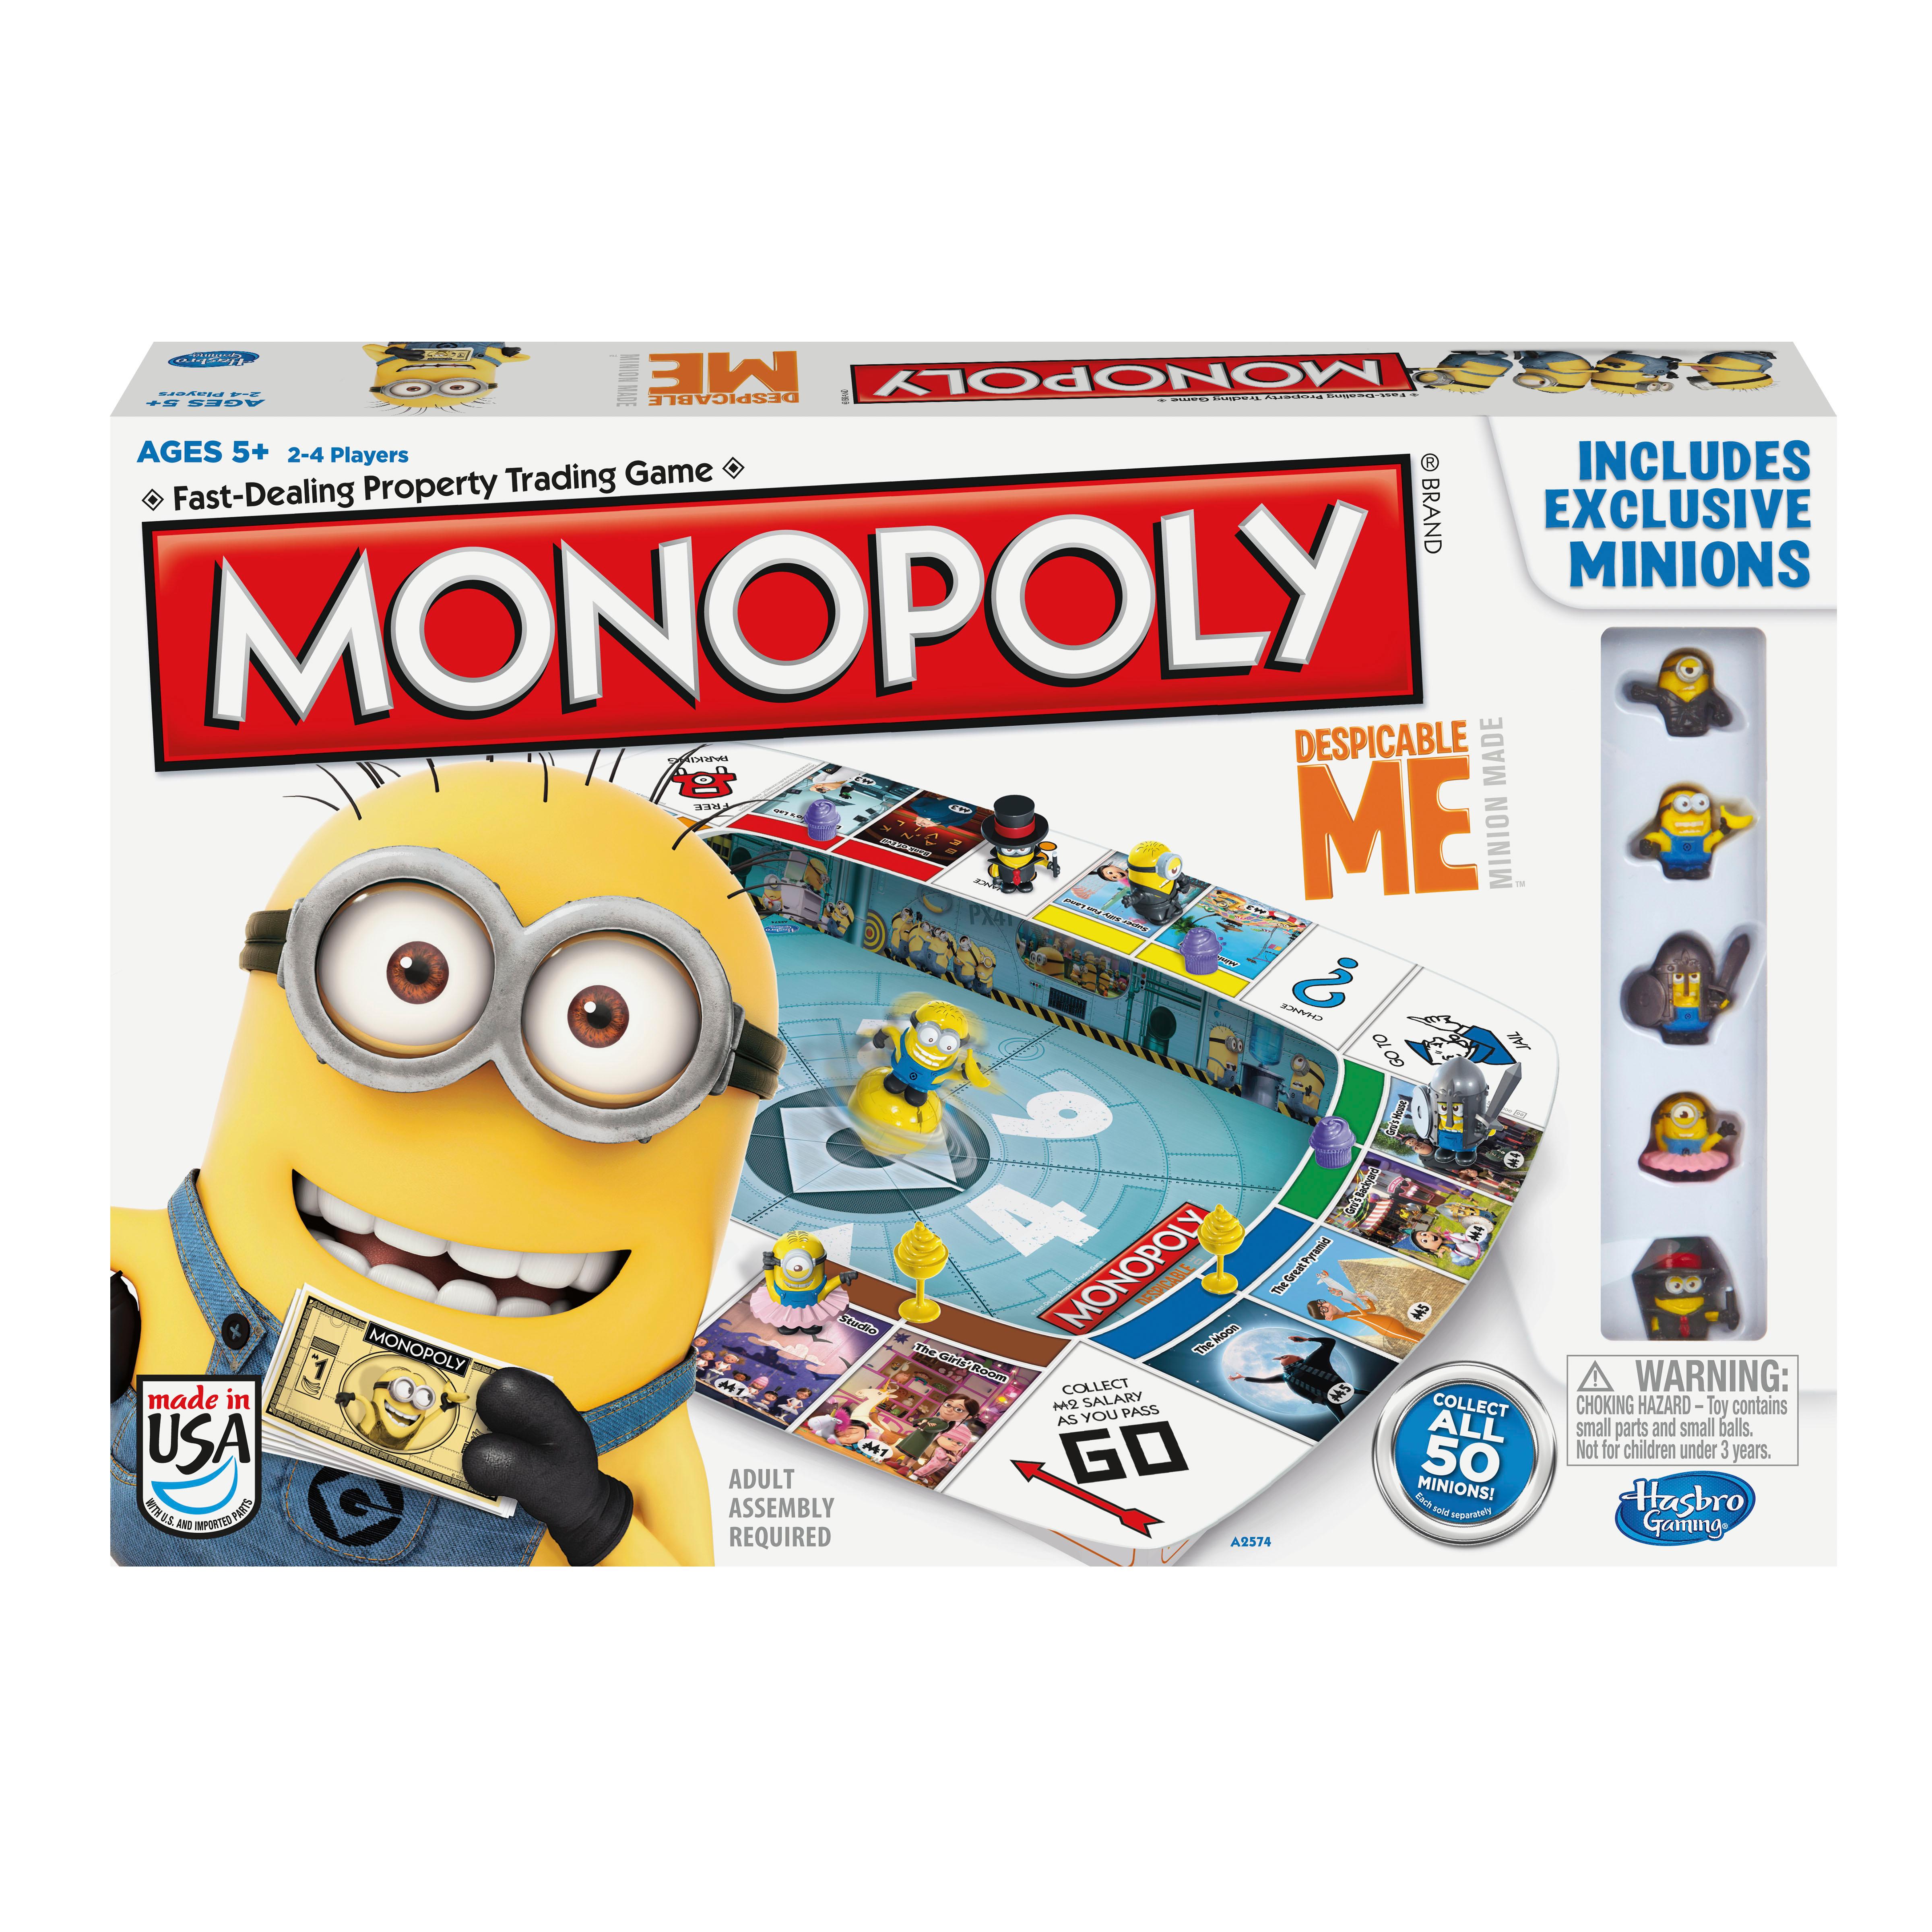 Monopoly Despicable Me 2 Game